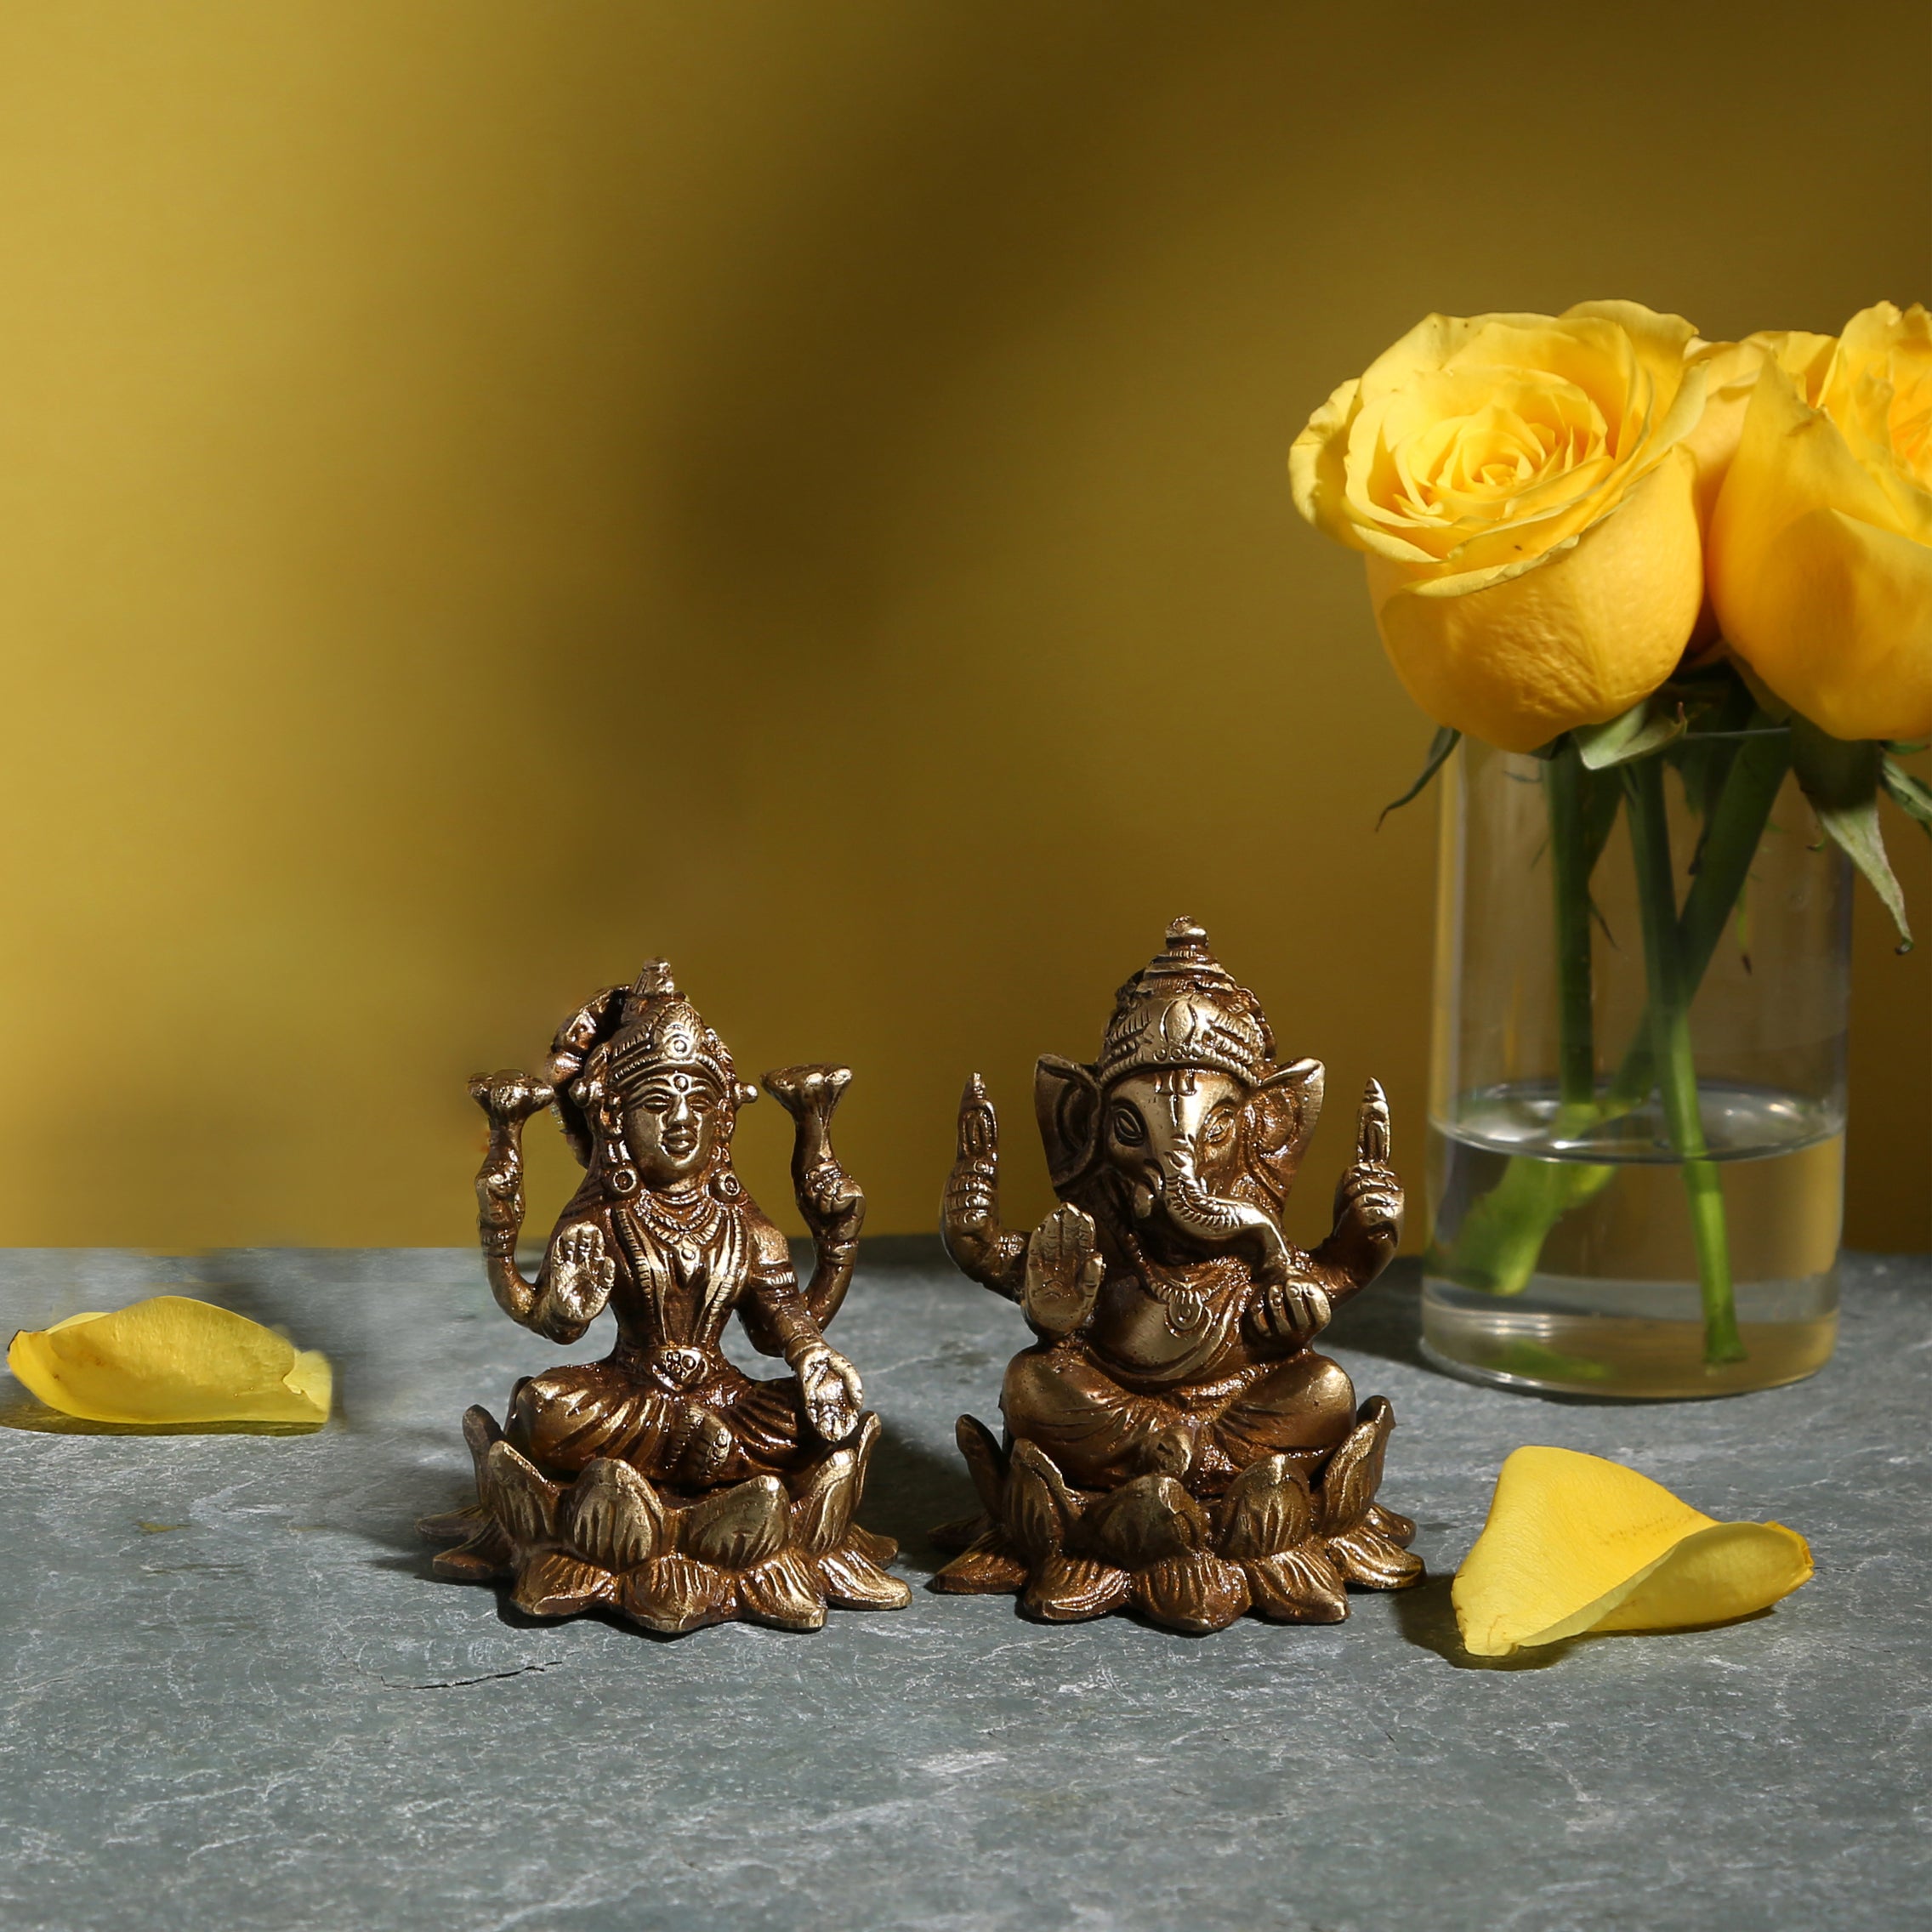 Brass Laxmi Ganesh Idol Pair